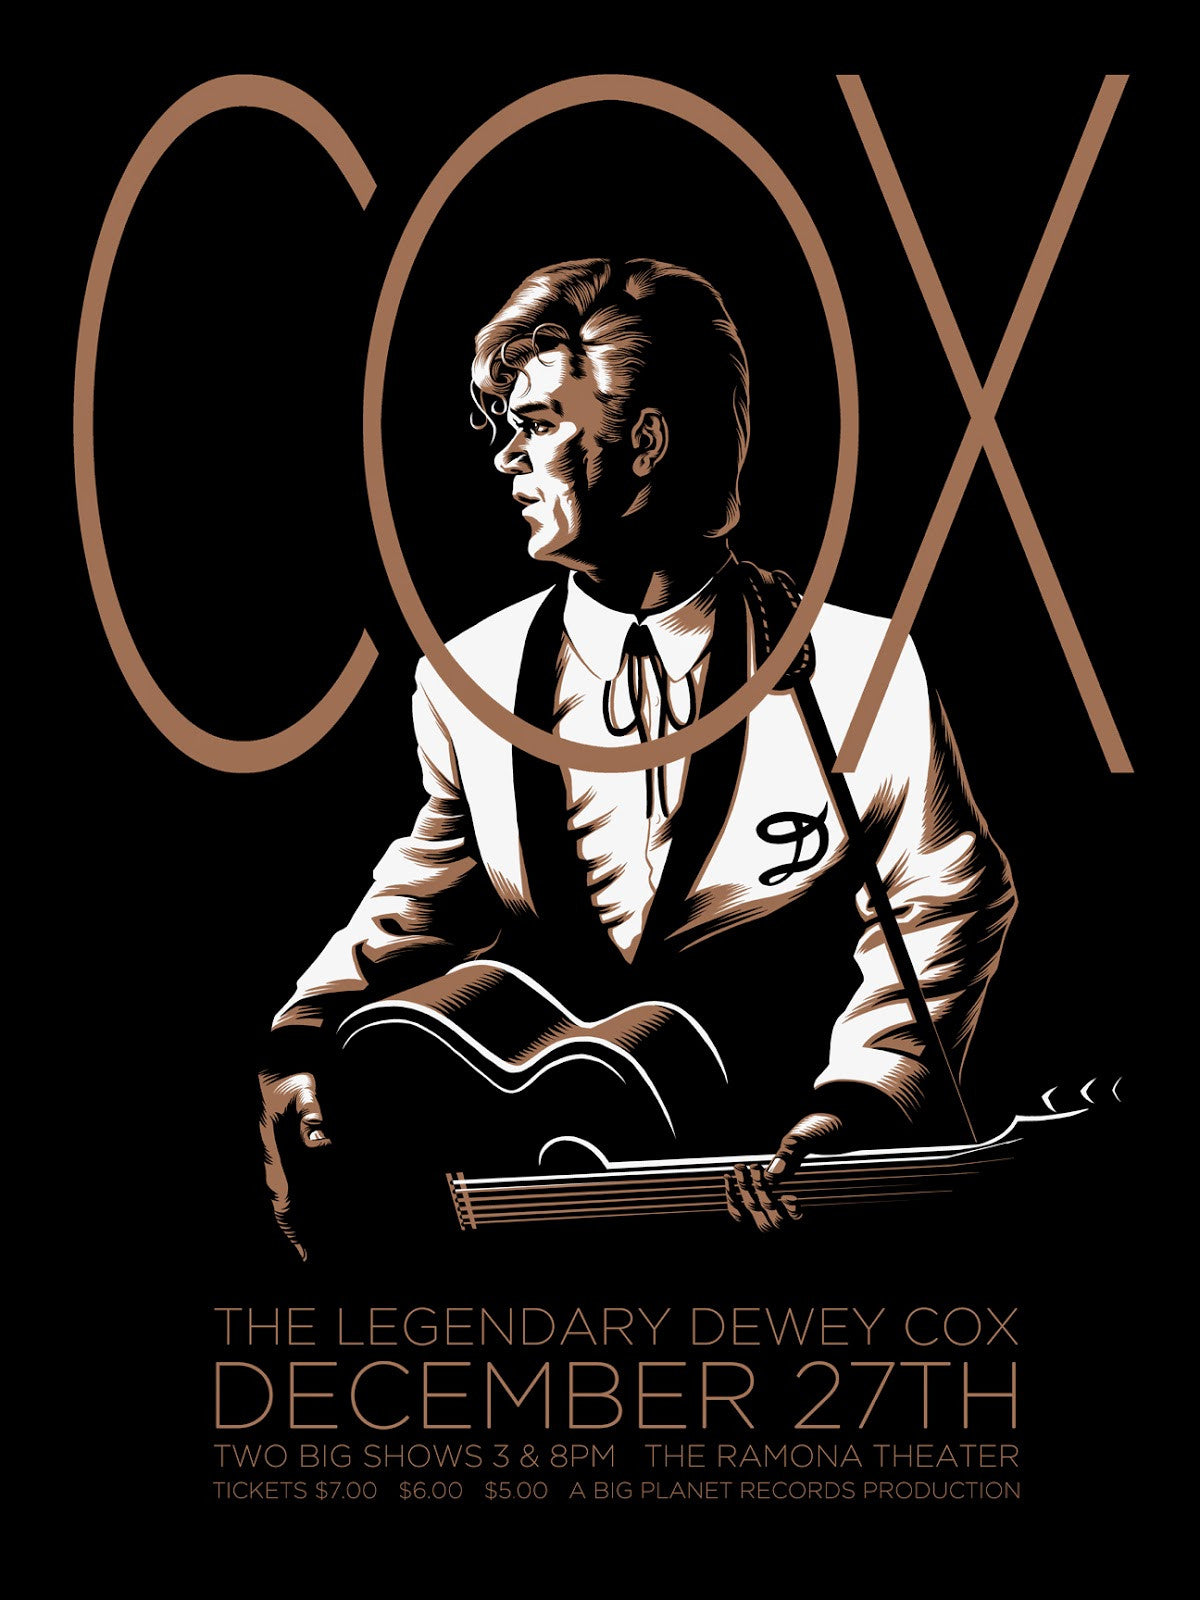 Mark Englert "The Legendary Dewey Cox"